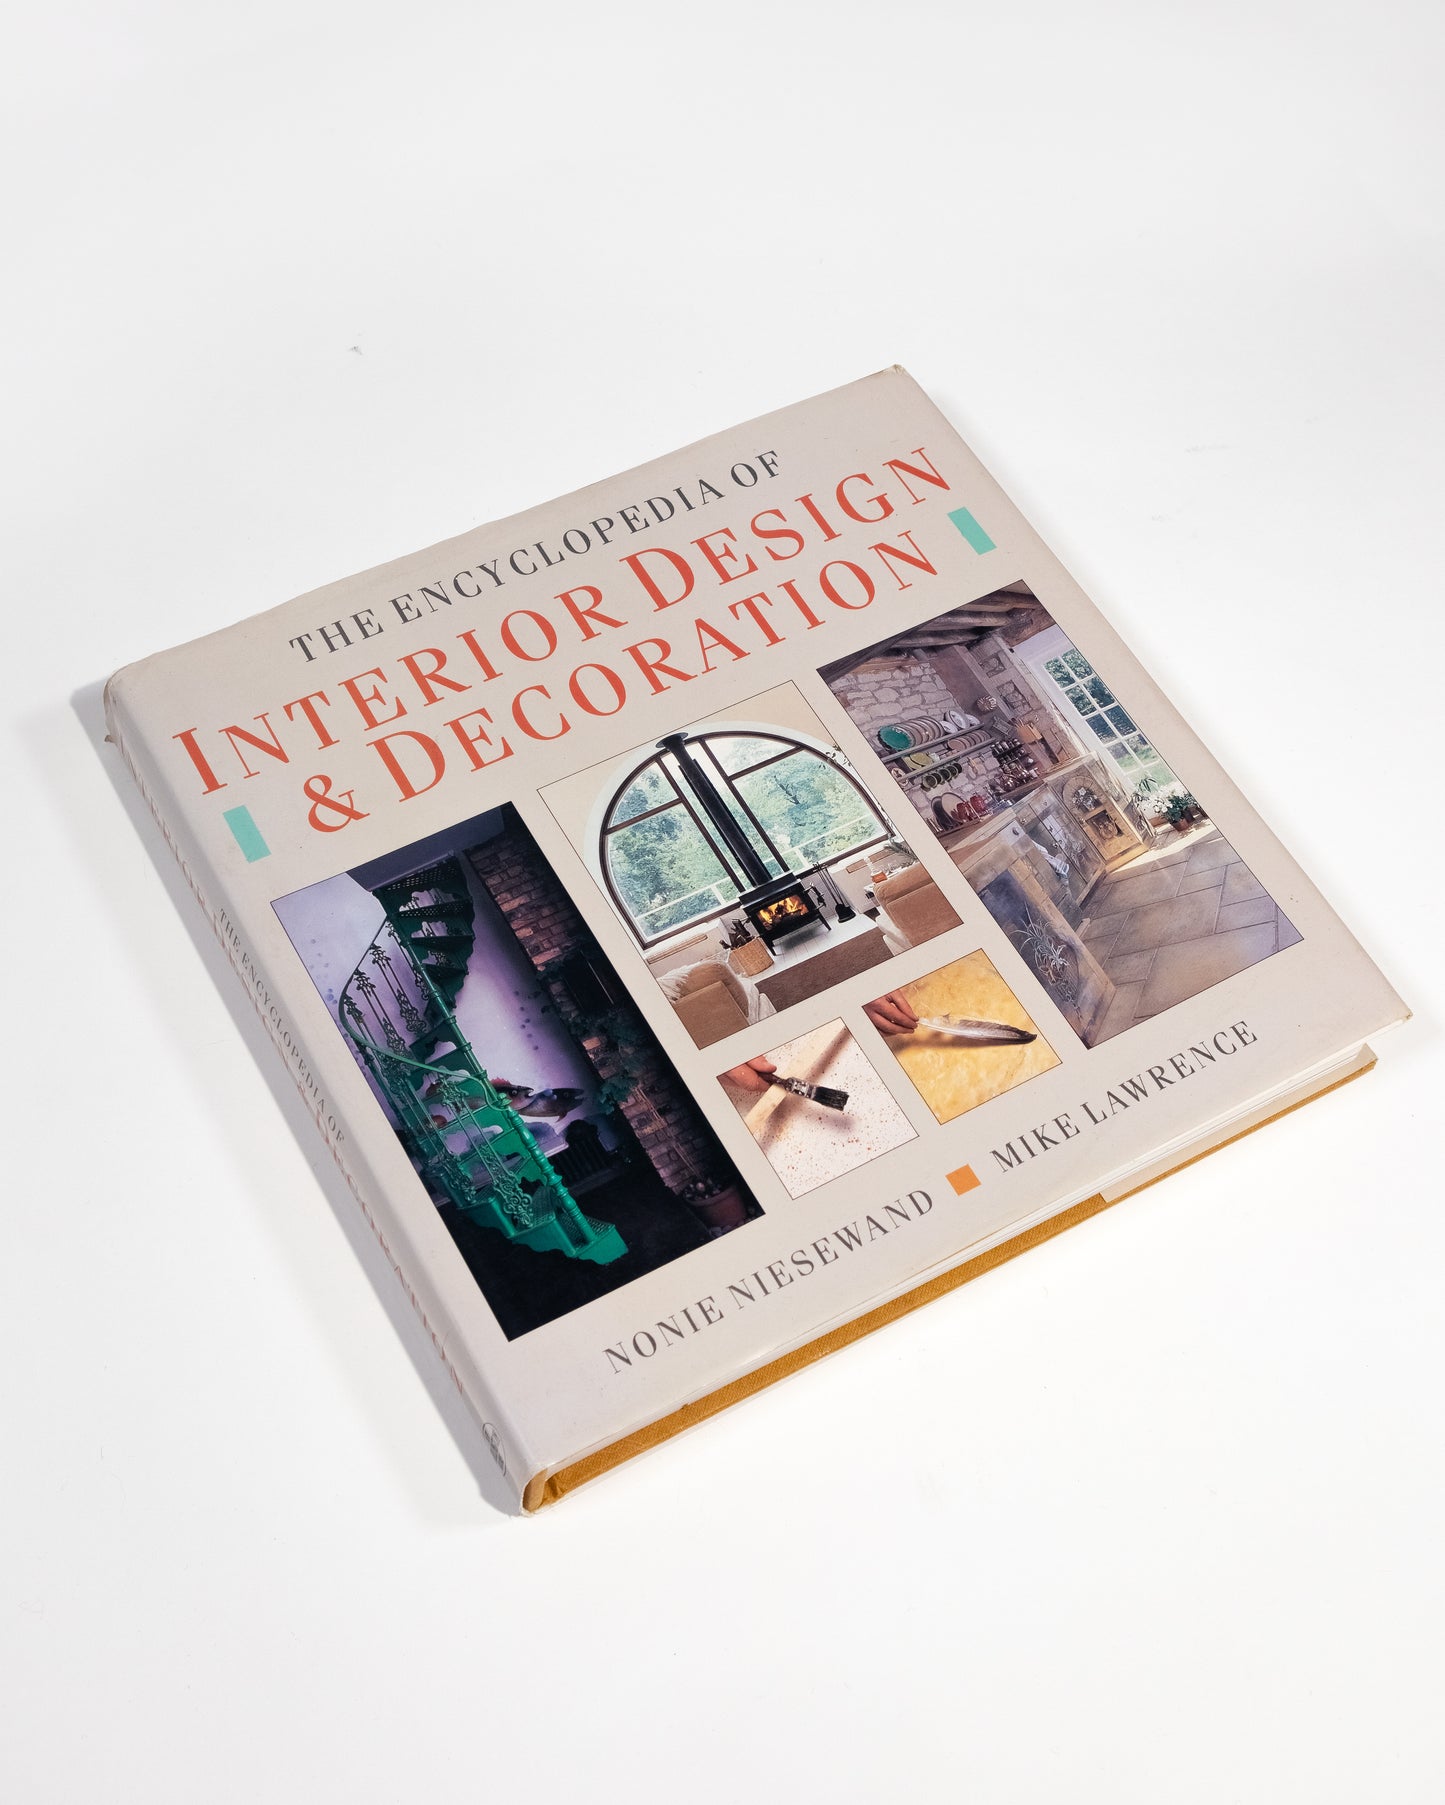 The Encyclopedia of Interior Design & Decoration